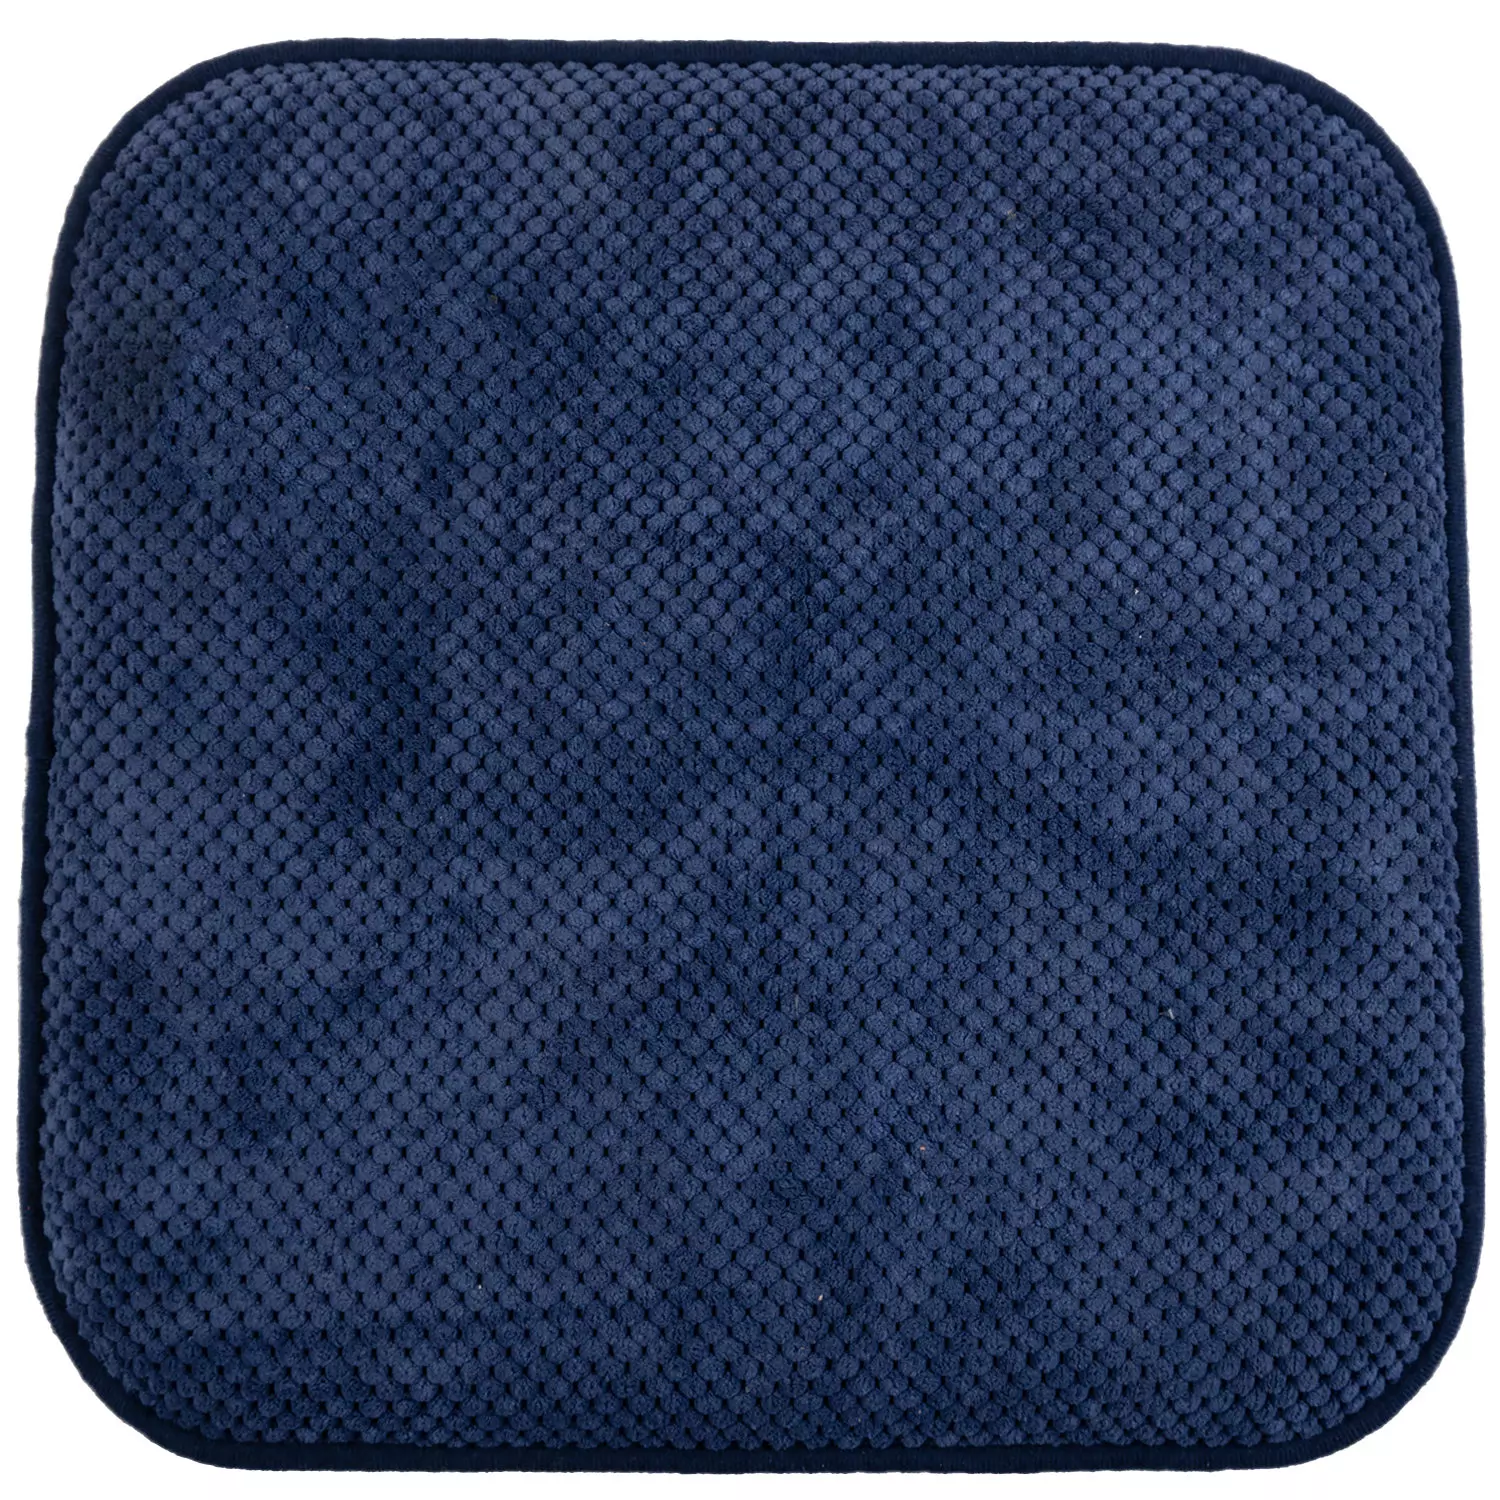 Memory foam chair pad, 16"x16", blue